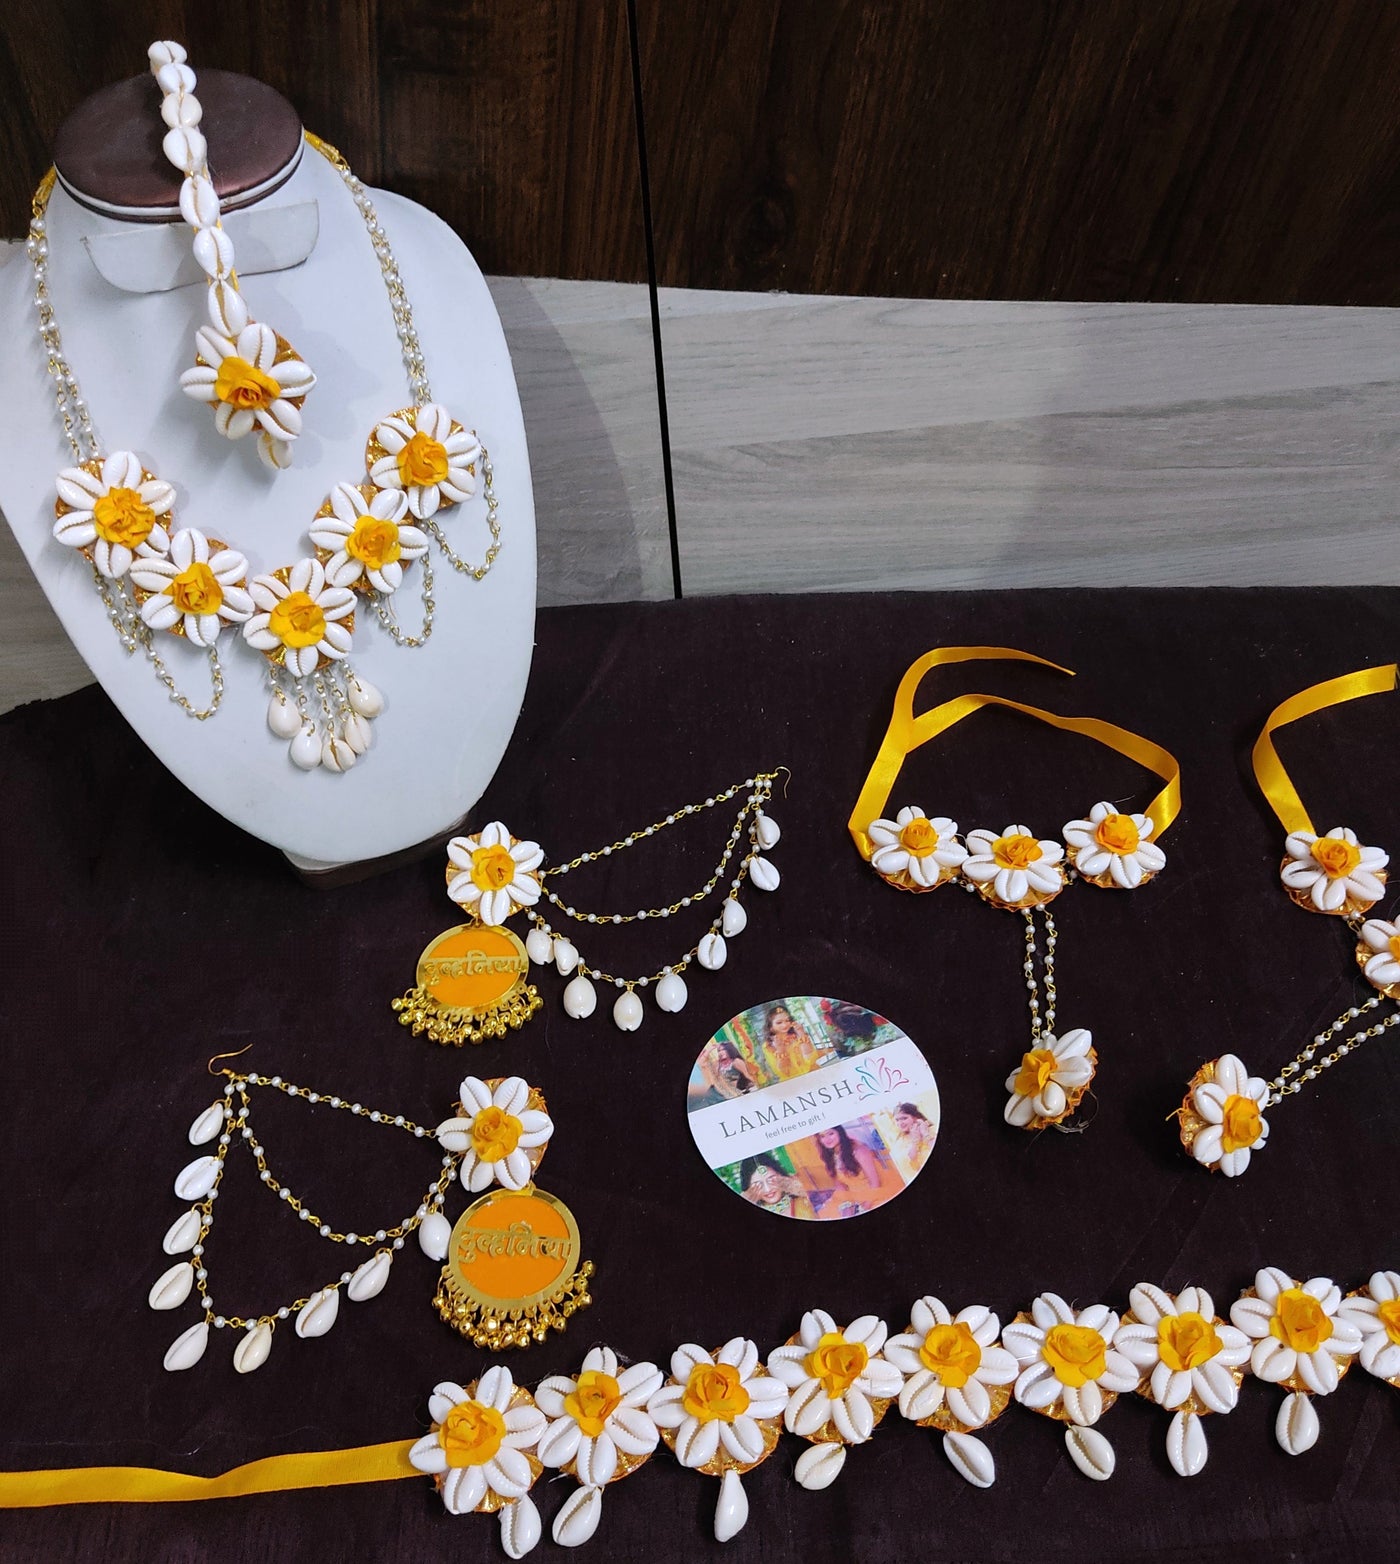 LAMANSH Flower Shell🐚 Jewellery White-Yellow / Standard / Shells 🐚 Style LAMANSH® Flower Jewellery Set With Shells Jewellery set Complete Bridal set